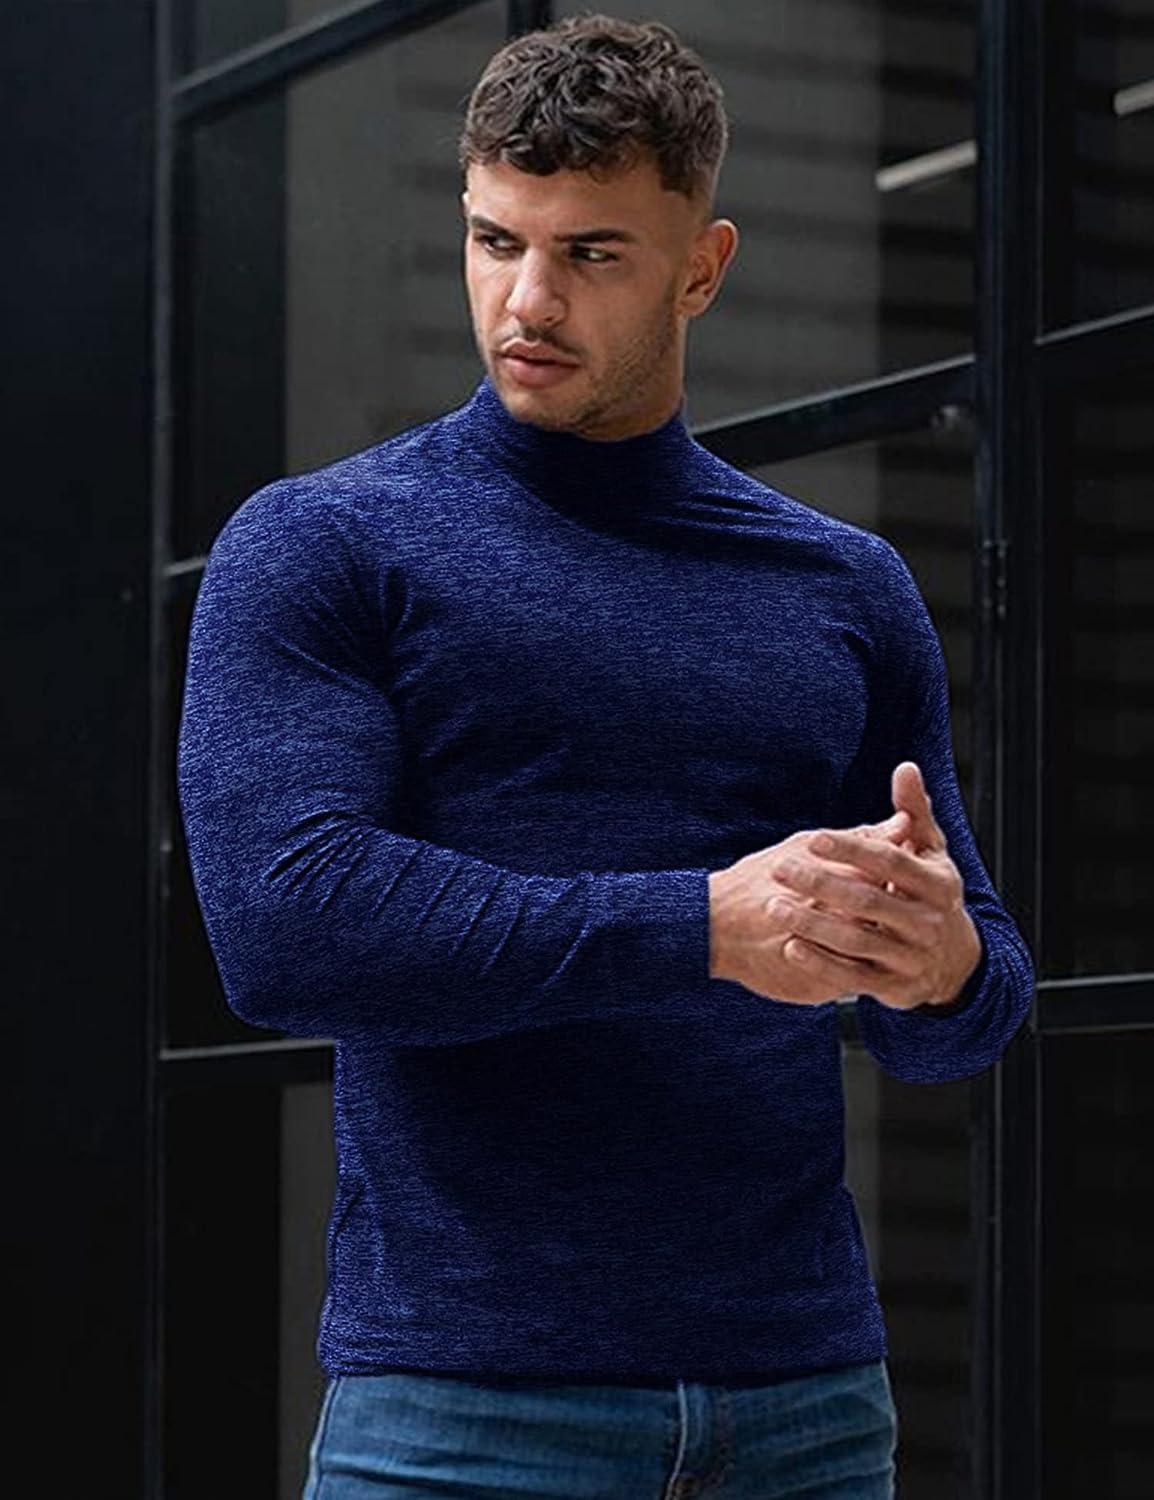  Men Sweater Autumn Thin Fleece O-Neck Thermal Clothes